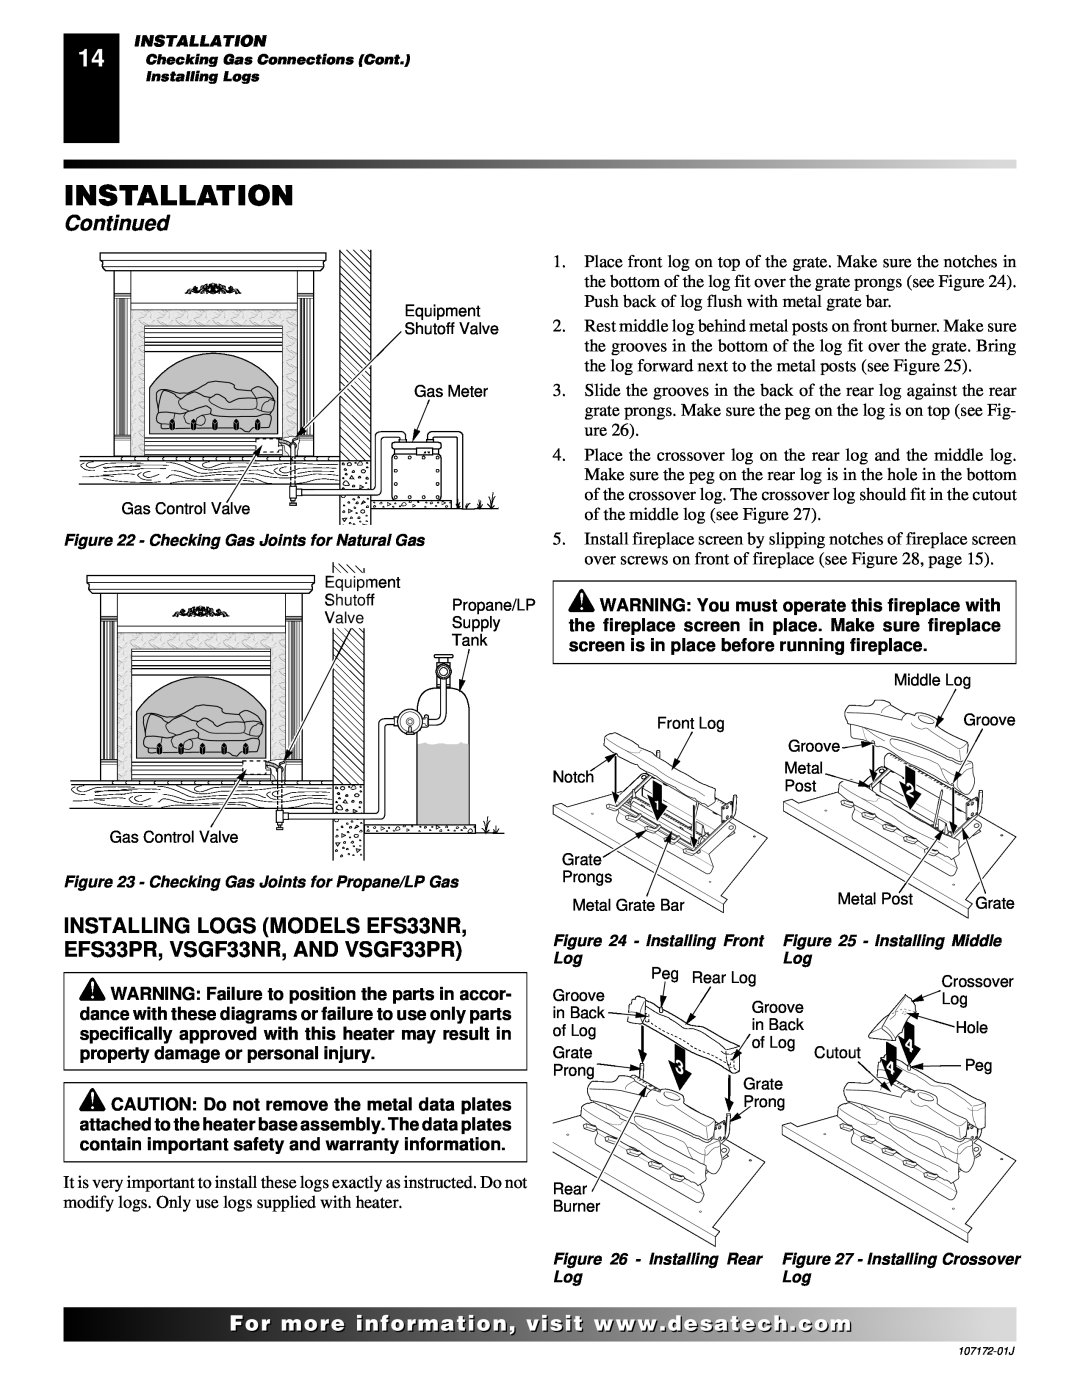 Desa EFS33PRA installation manual Installation, Continued, Push back of log flush with metal grate bar 